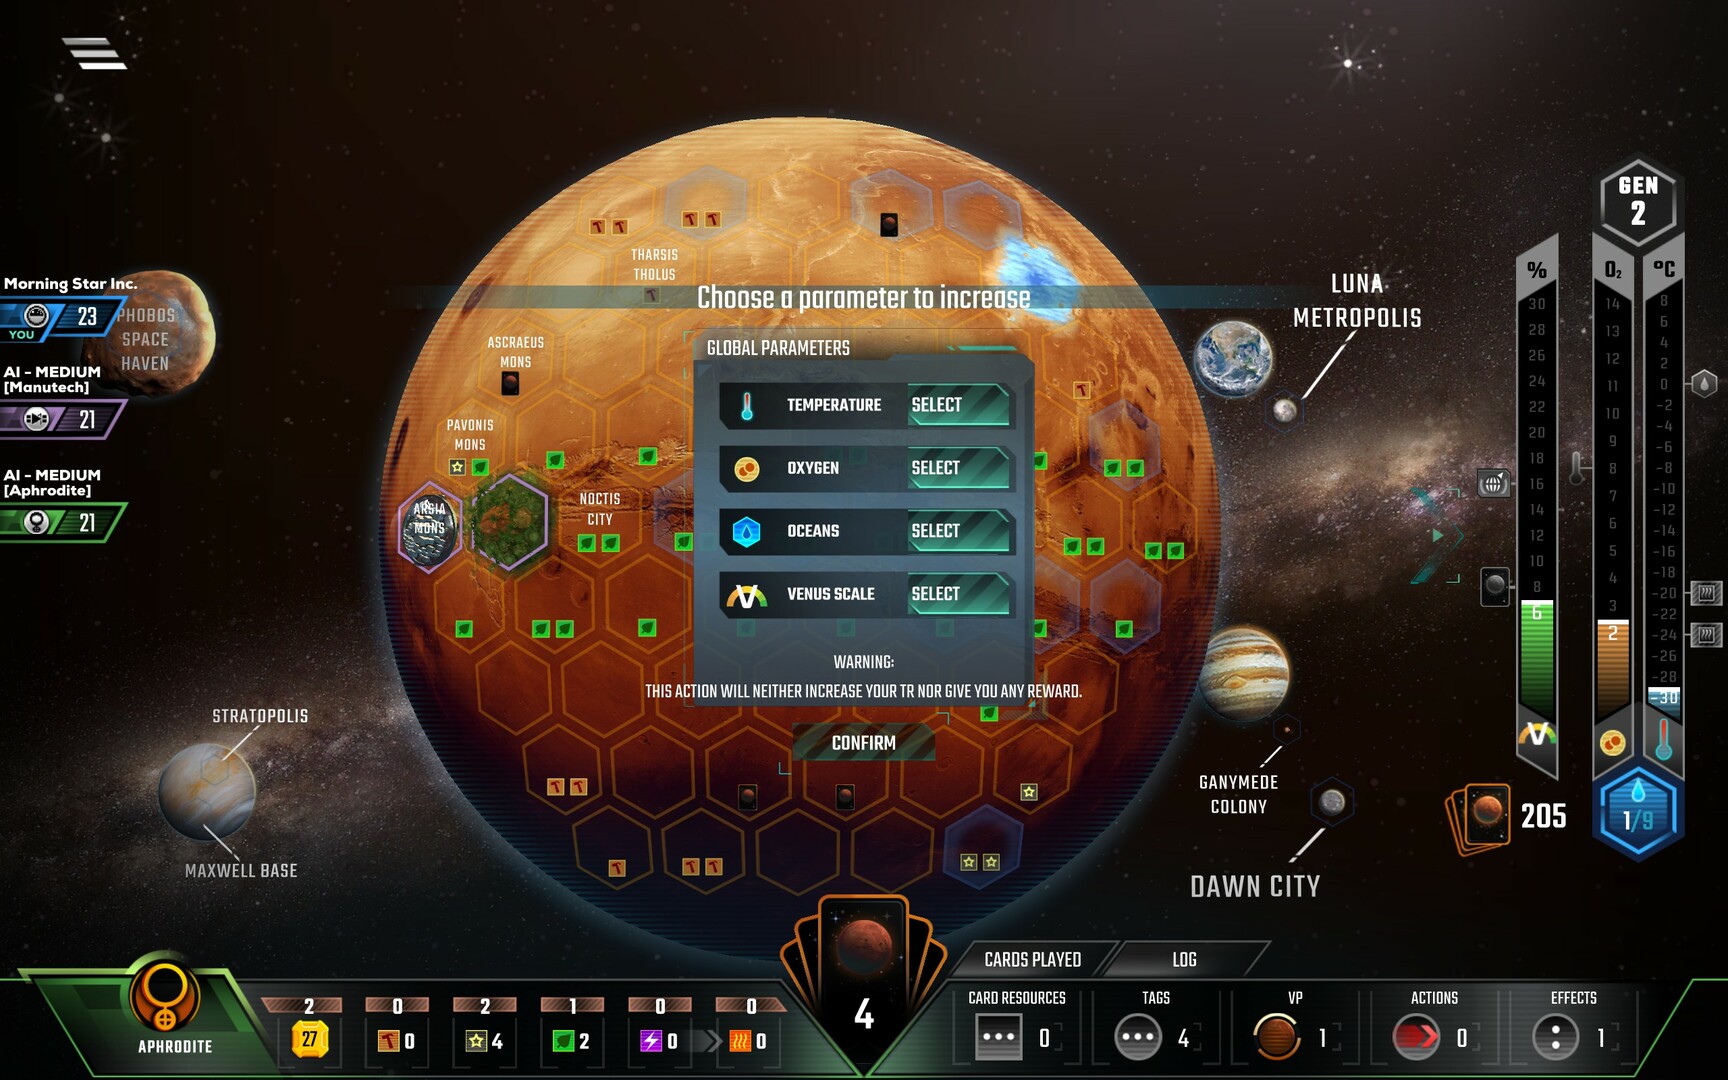 Terraforming Mars - Venus Next on Steam